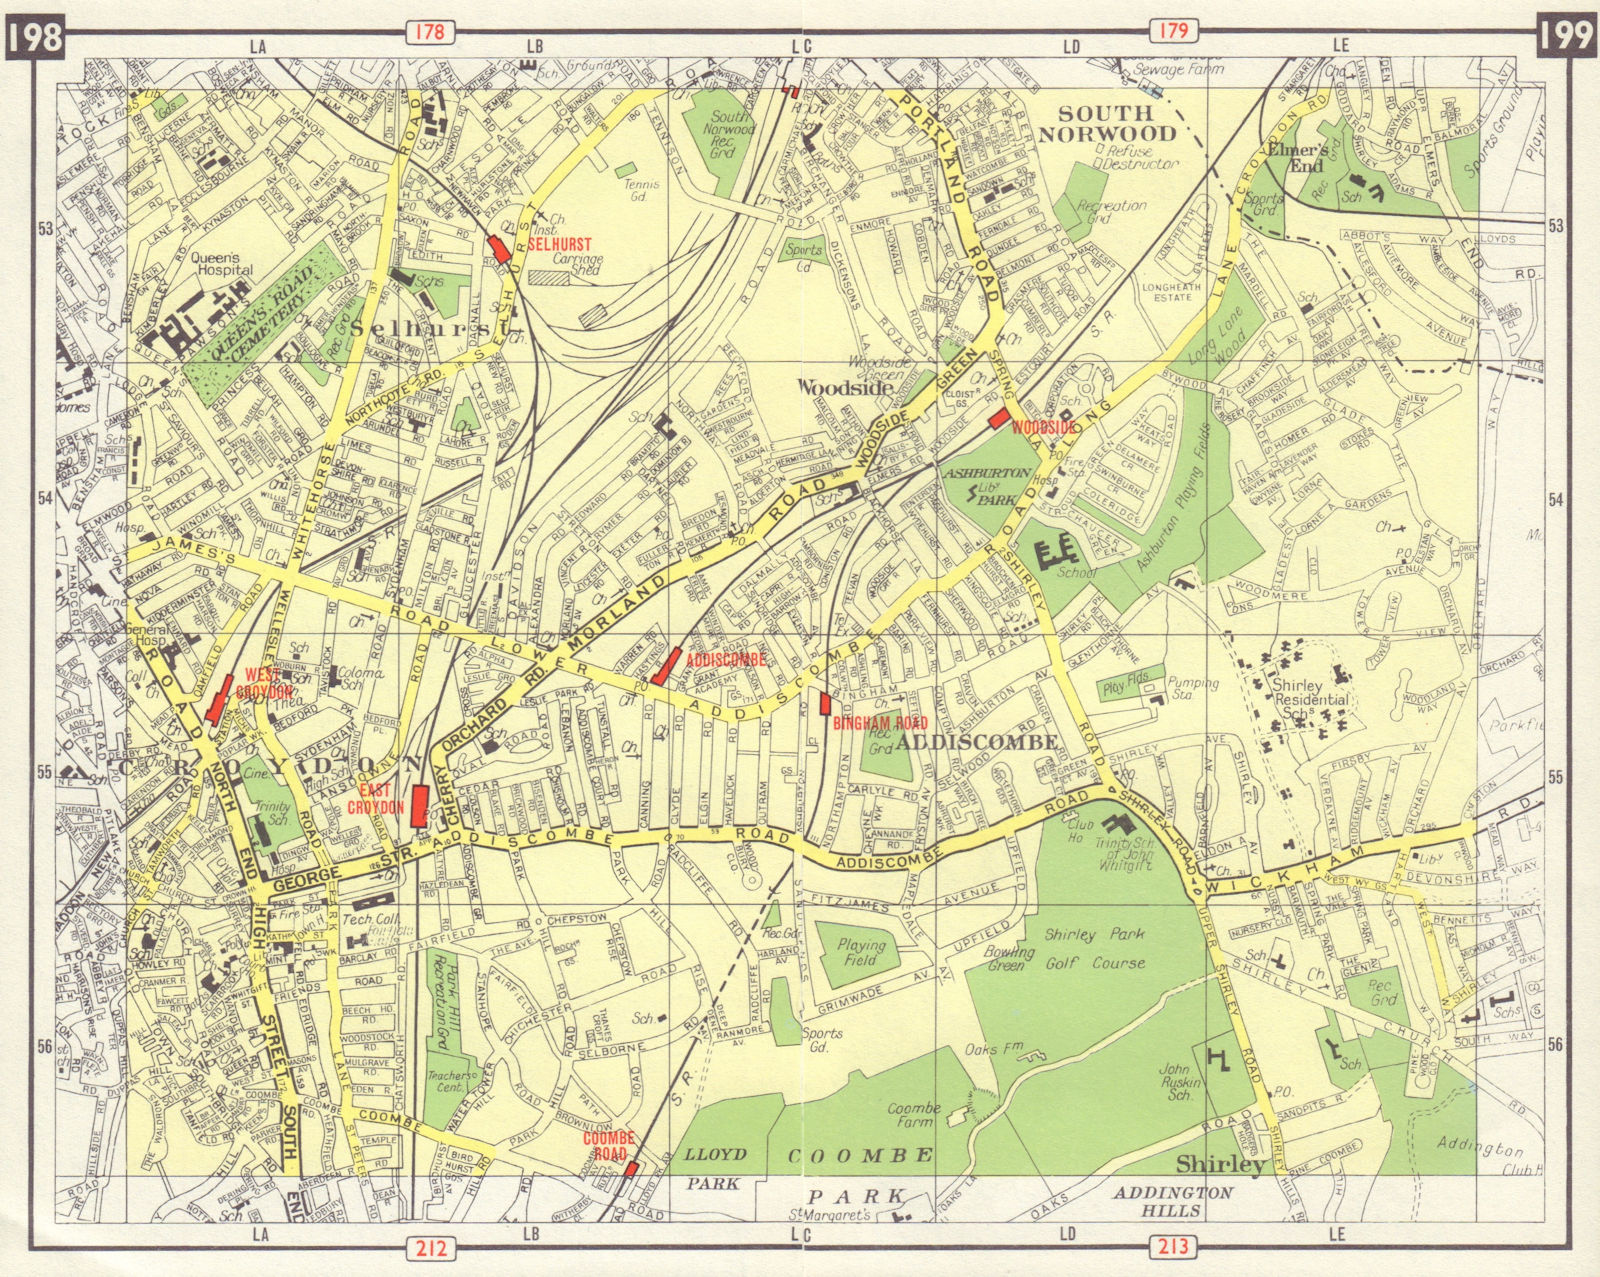 S LONDON Croydon Selhurst Woodside Addiscombe South Norwood Elmers End 1965 map